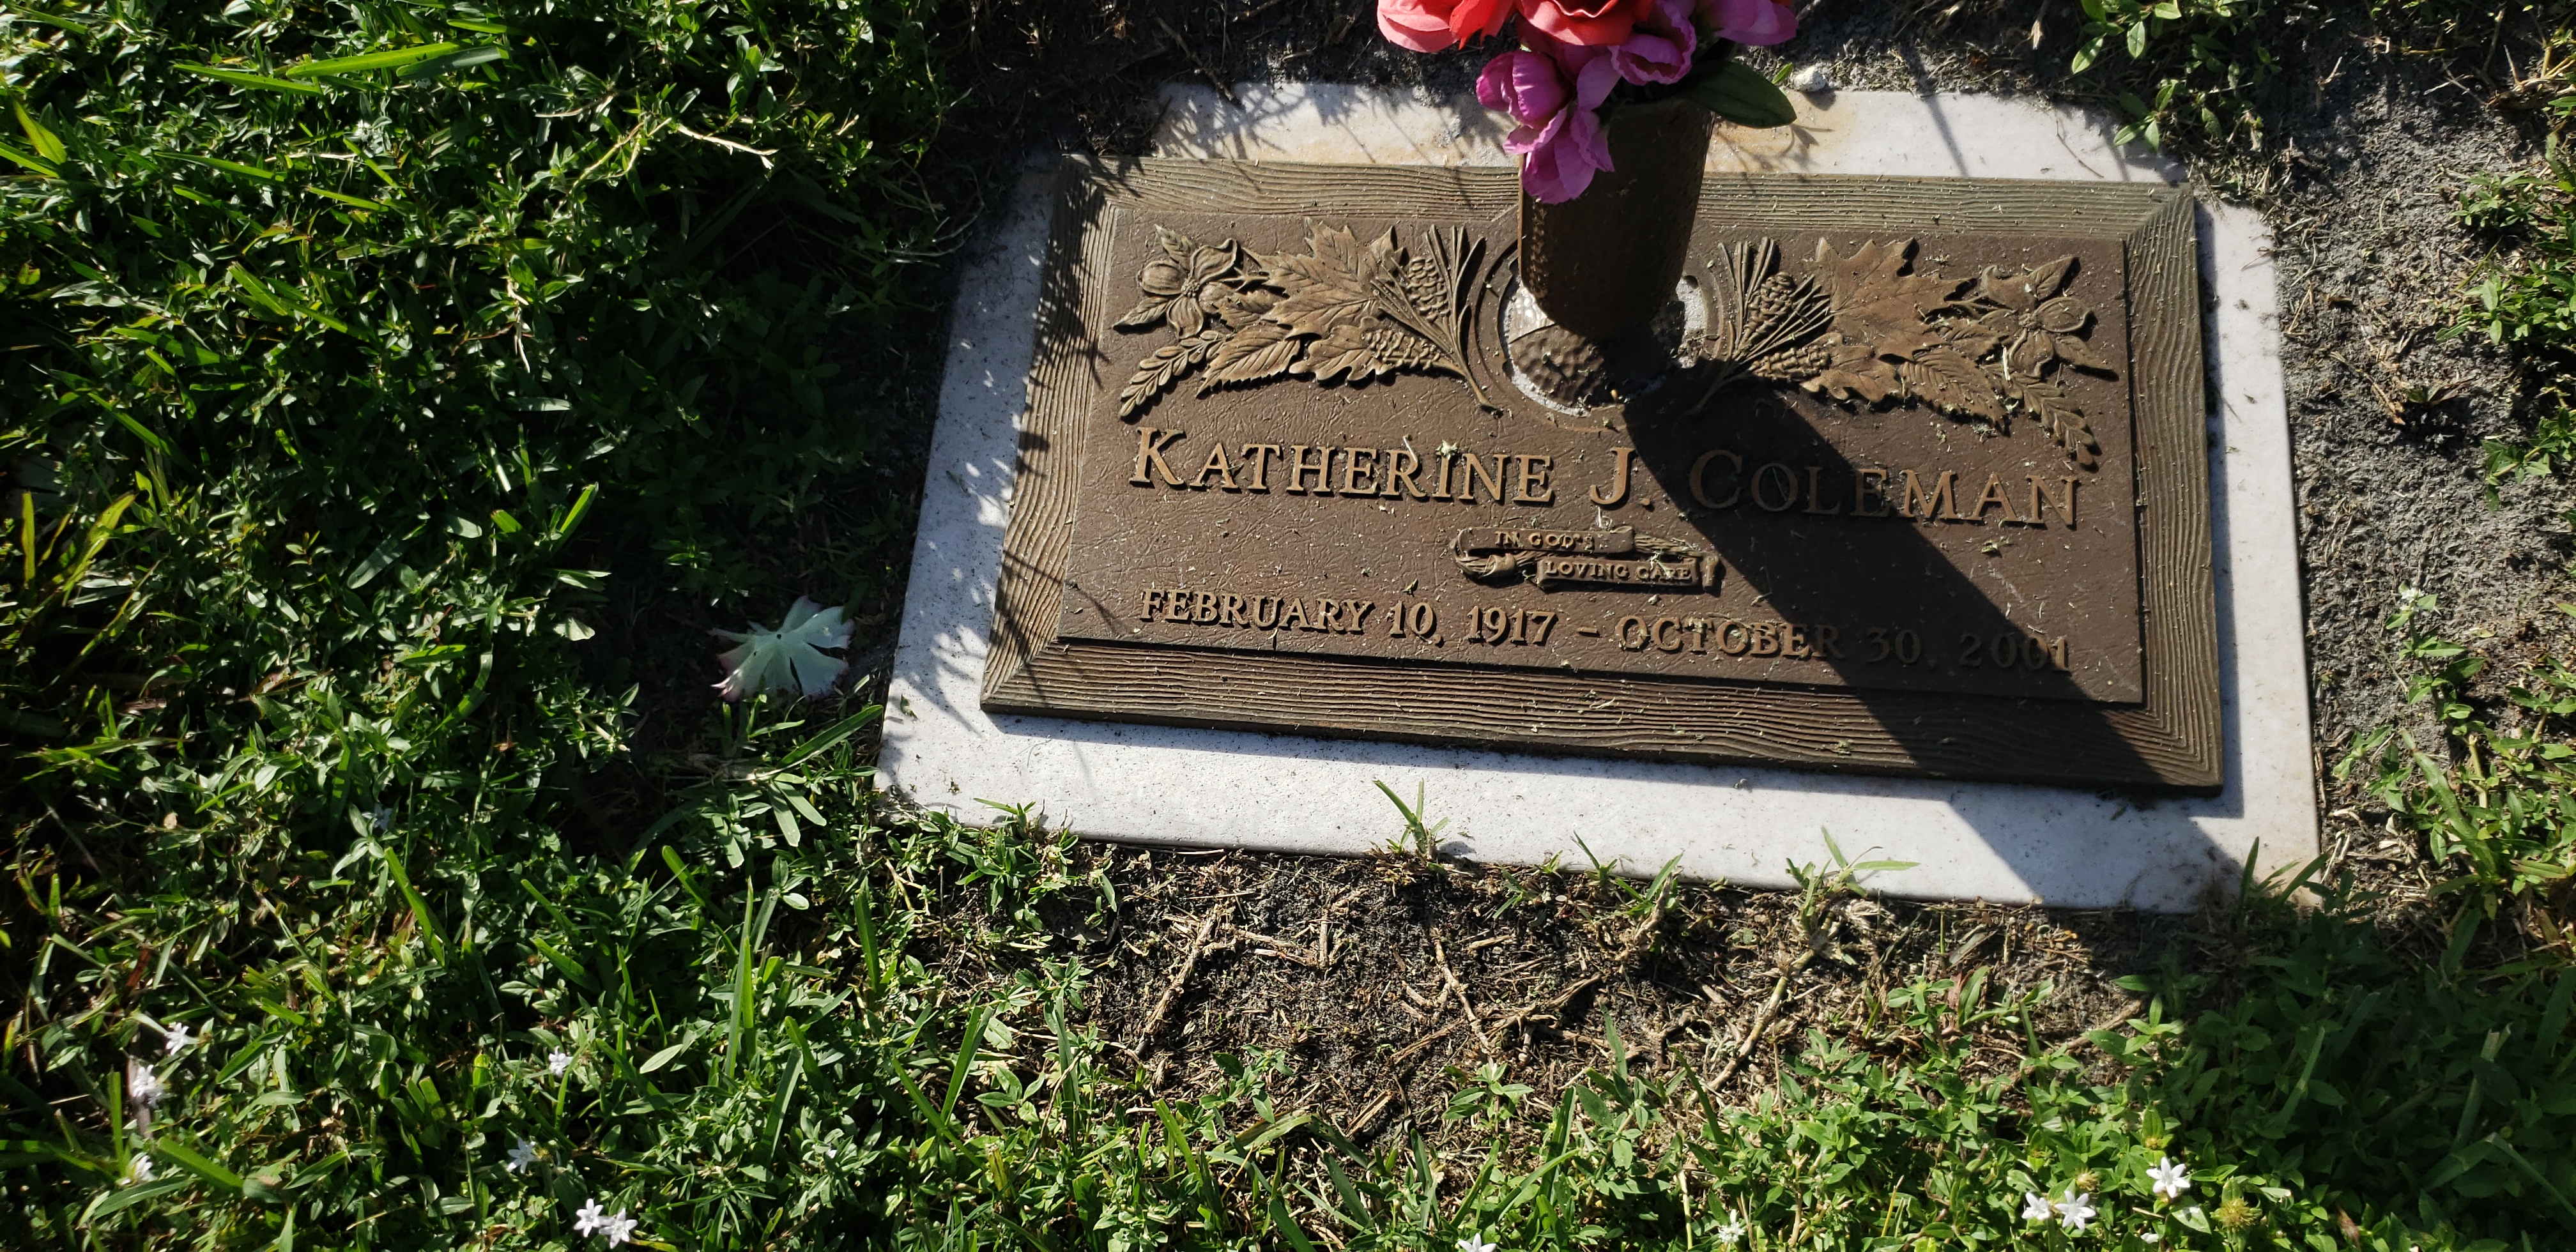 Katherine J Coleman